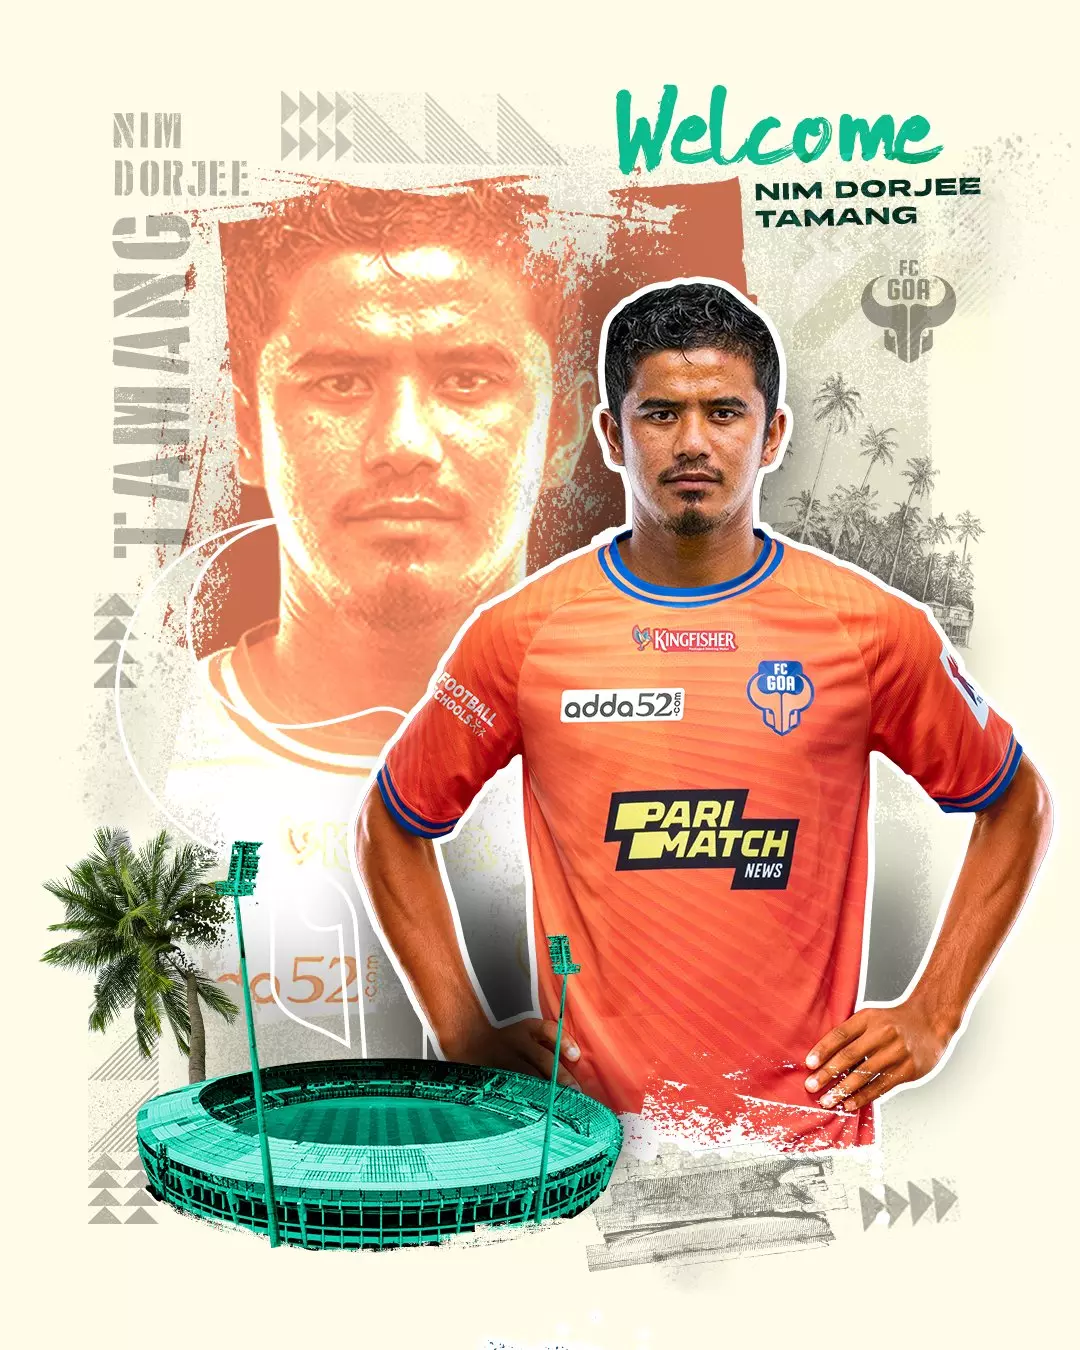 FC Goa welcoms Nim Dorjee Tamang with this social media post. 